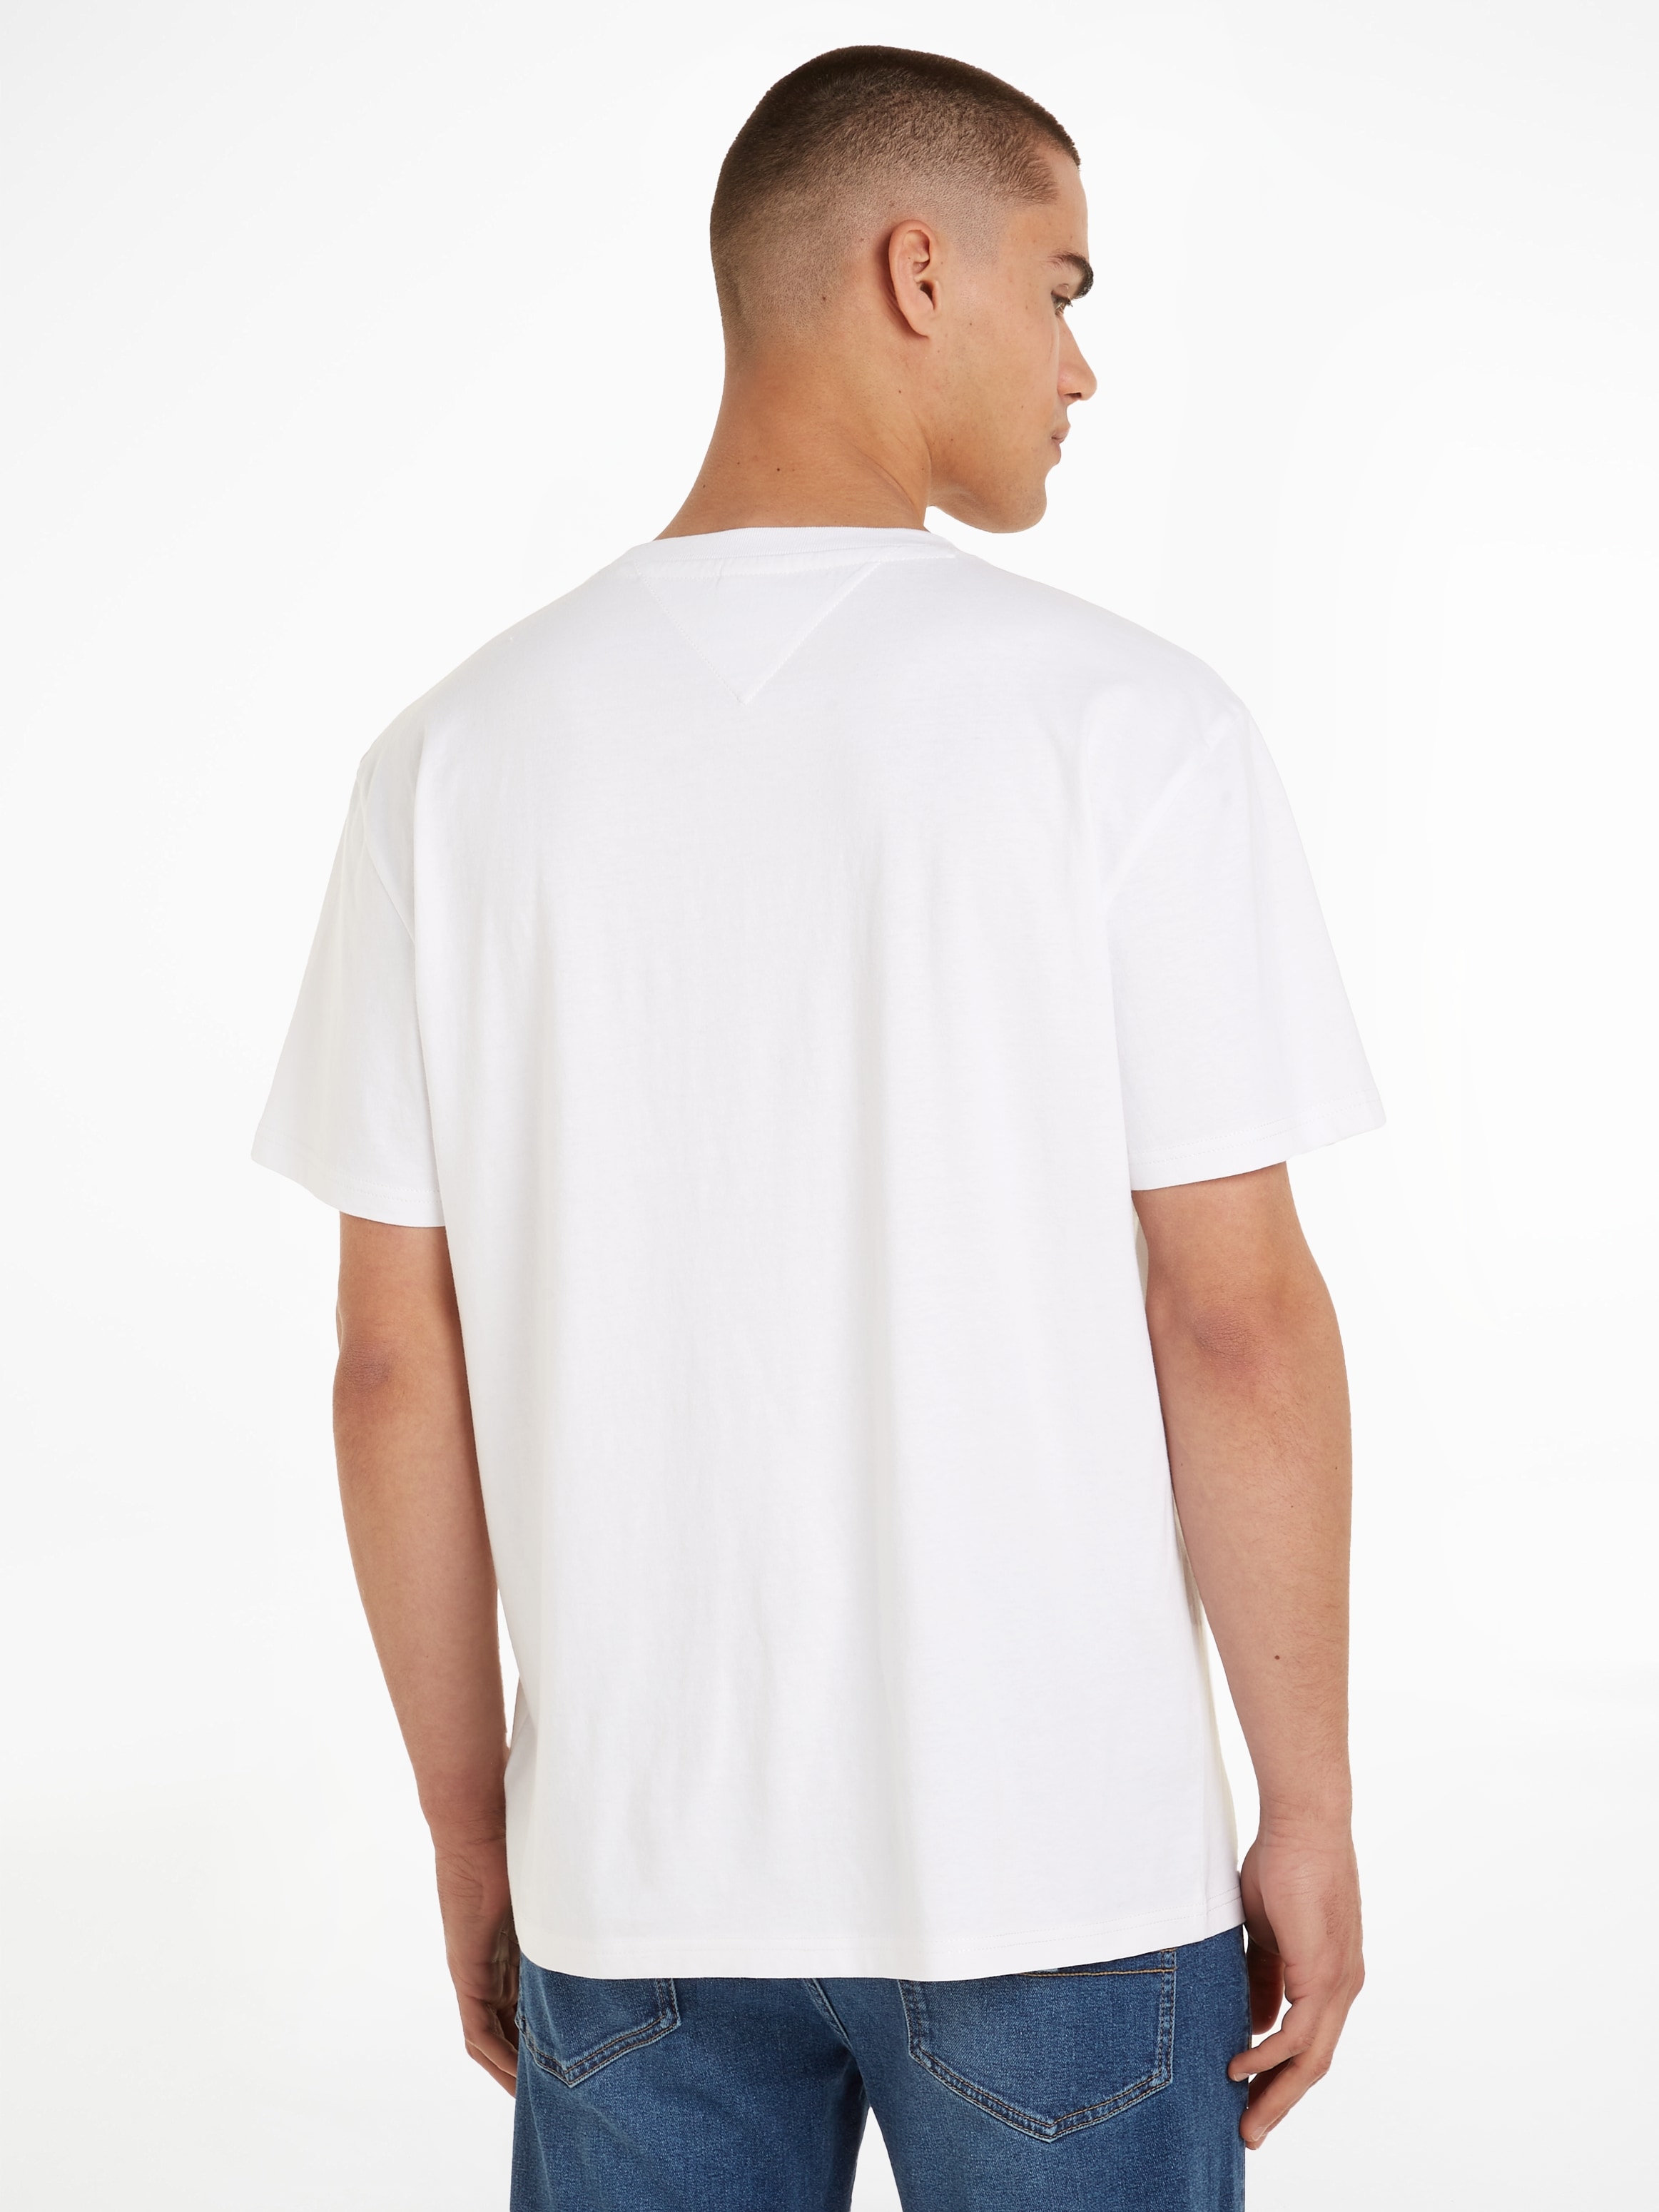 Tommy Jeans T-Shirt »TJM REG LINEAR LOGO TEE EXT«, mit Markenlabel